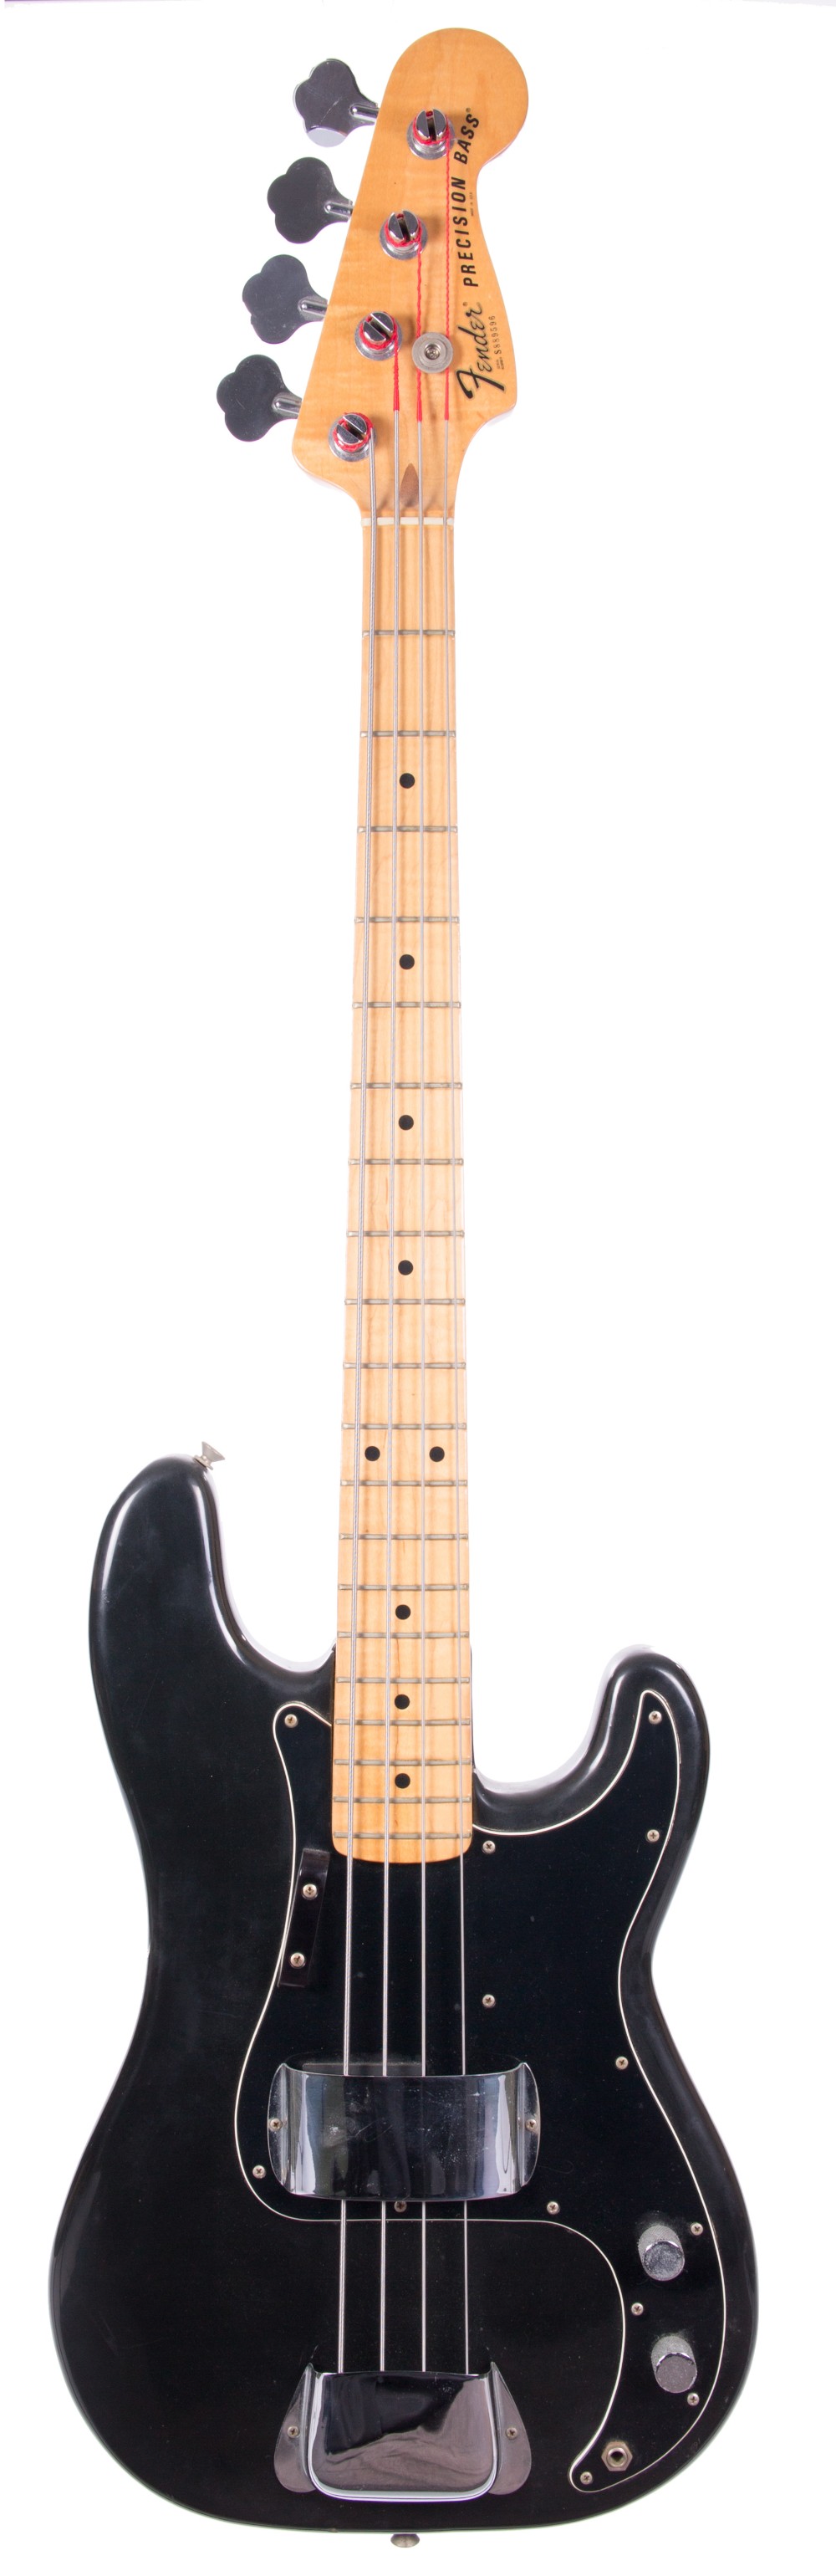 1978 Fender Precision Bass guitar, made in USA, ser. no. S8xxxx6; Finish: black, some minor